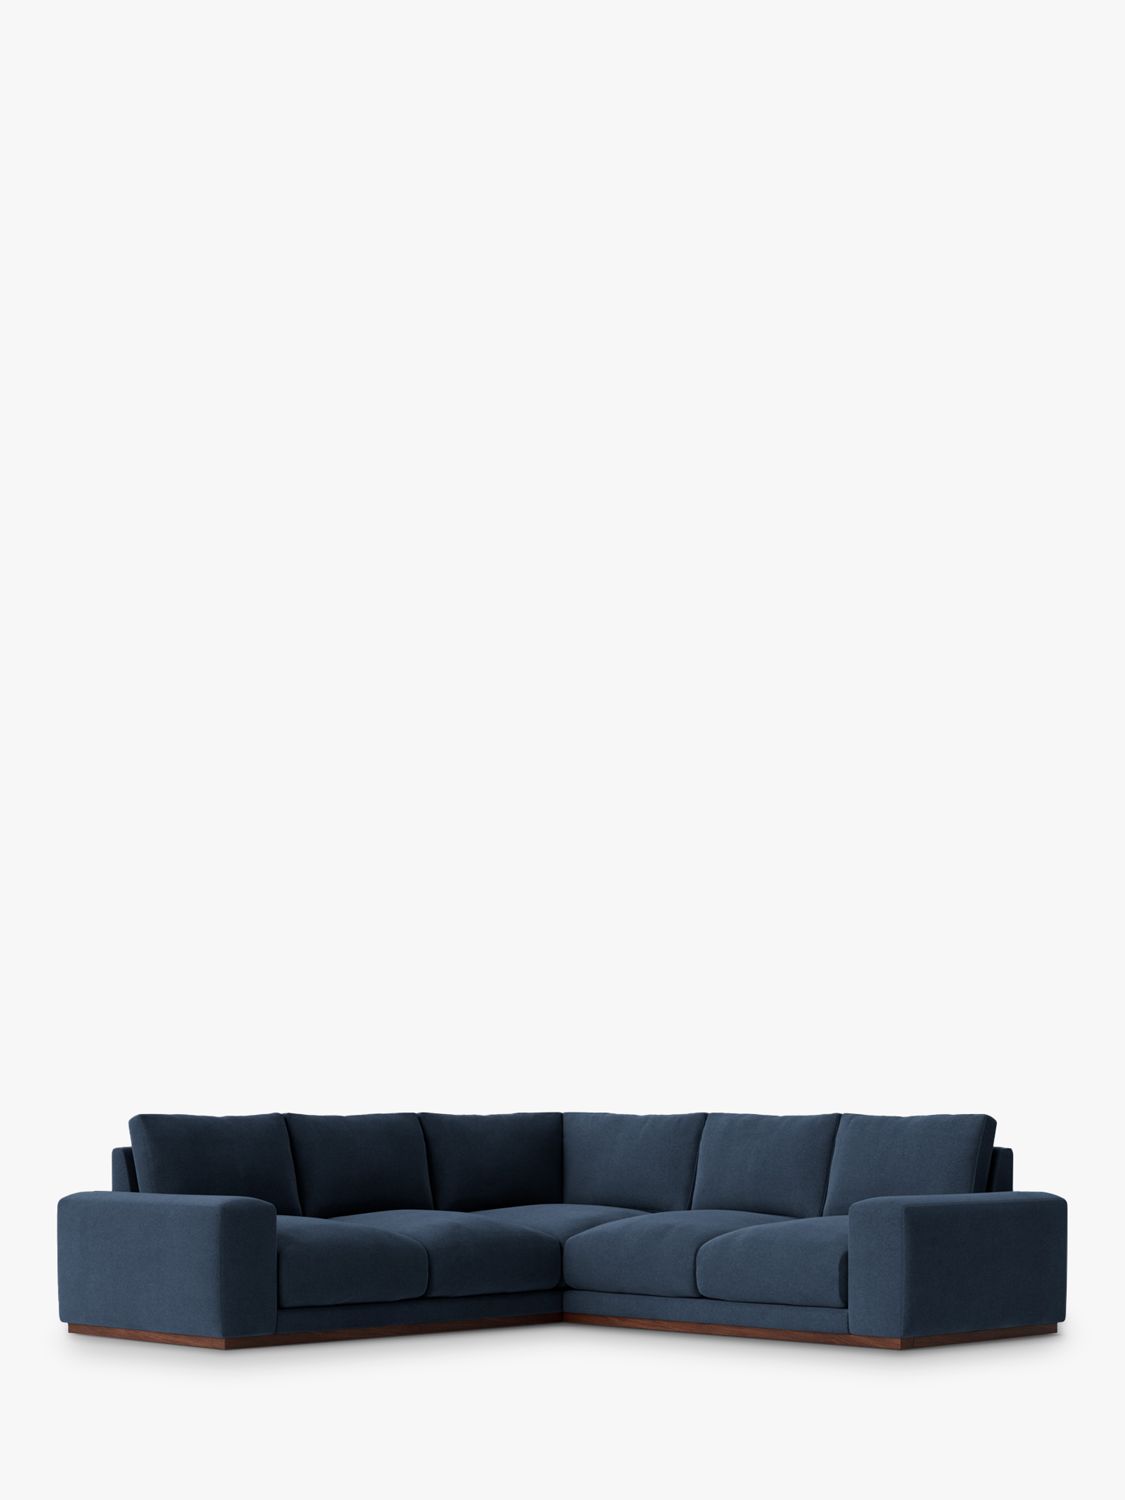 Denver Range, Swoon Denver Grand 5 Seater Corner Sofa, Smart Wool Indigo